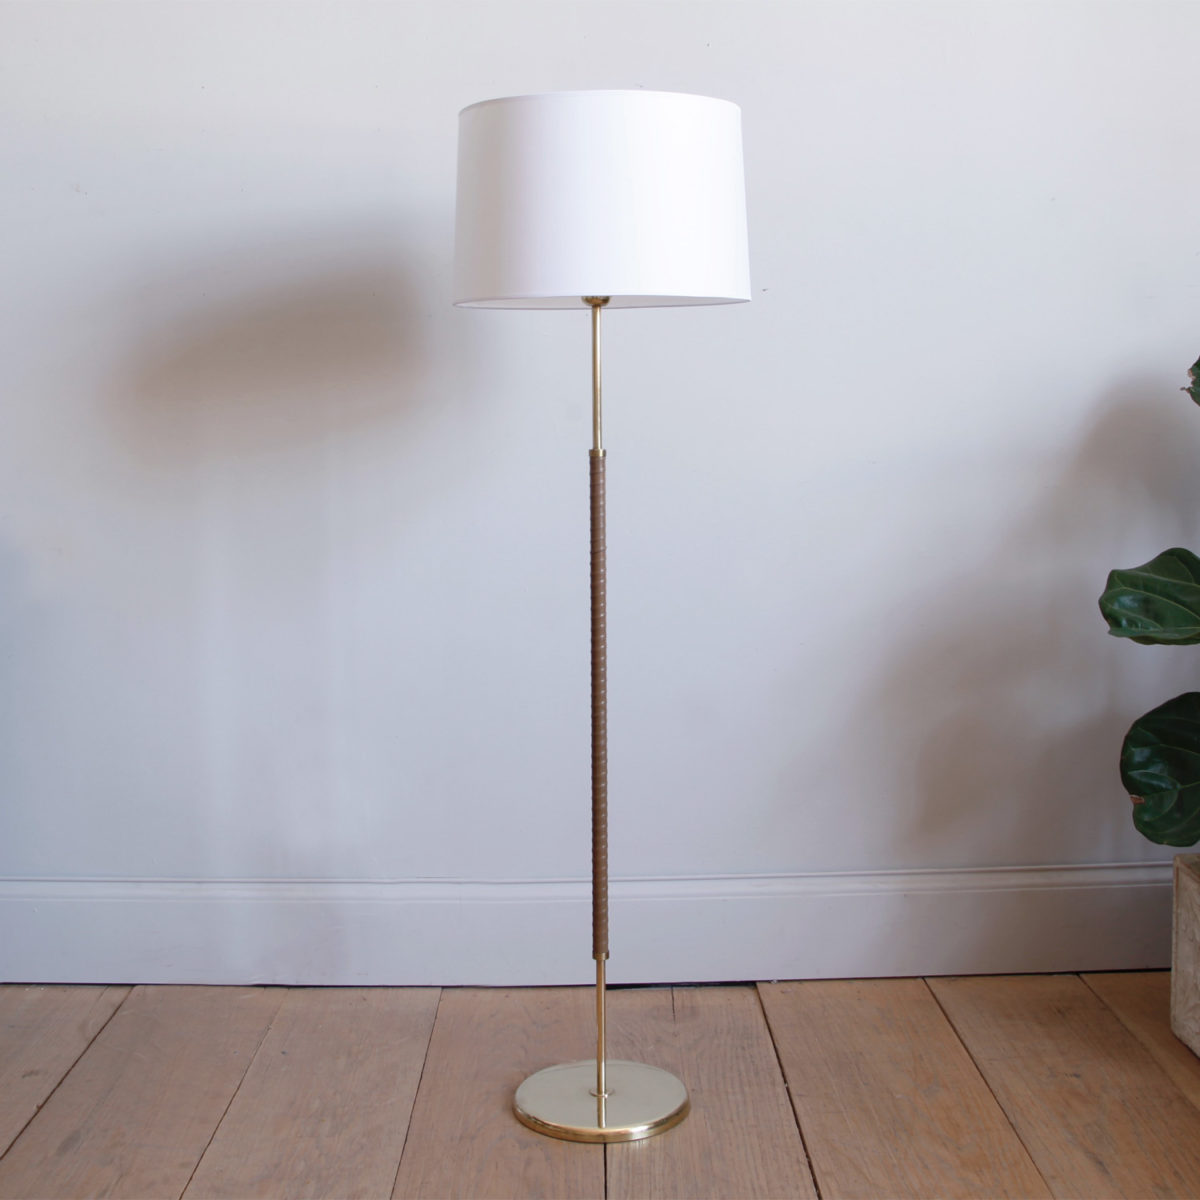 https://lawtonmull.com/wp-content/uploads/Swedish-Leather-Standing-Lamp-1-1200x1200.jpg